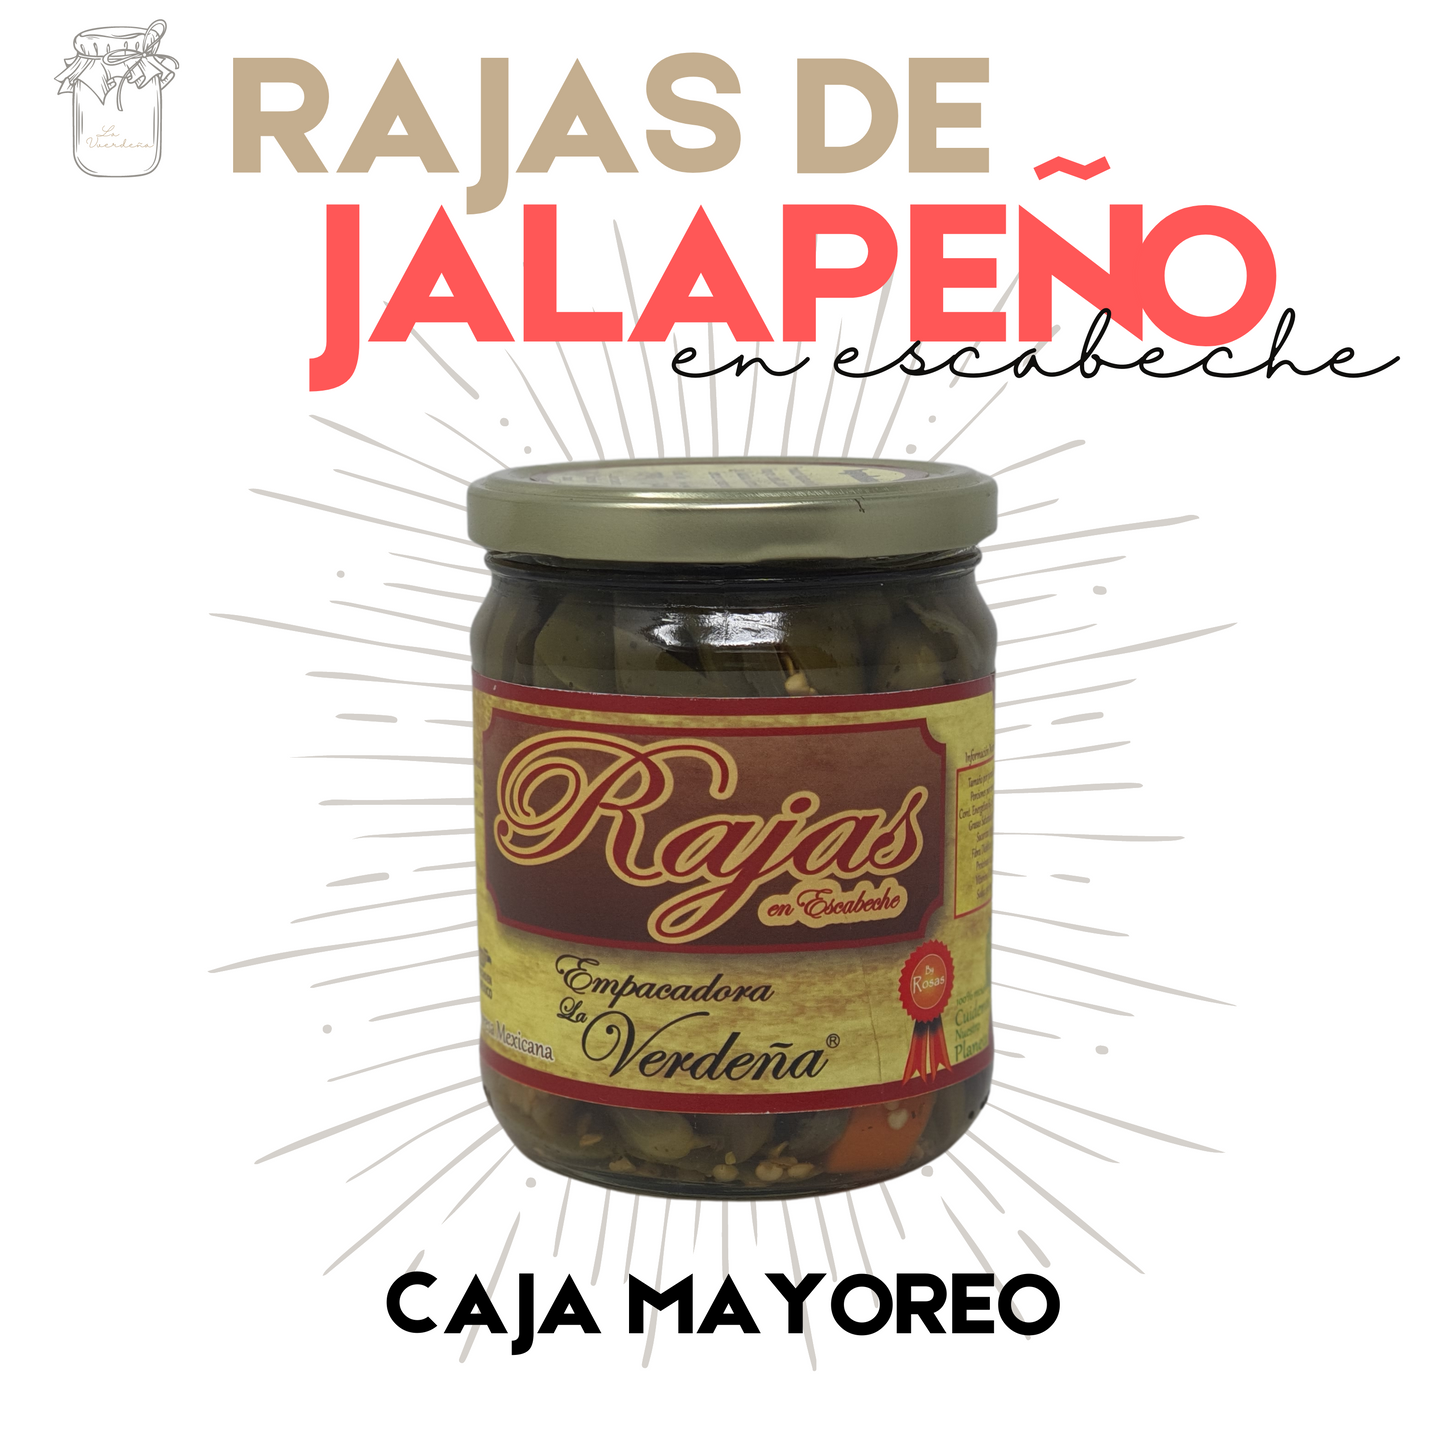 Jalapeño en Escabeche | Rajas | Gourmet | Tradicional | Caja Mayoreo | Mexpofood